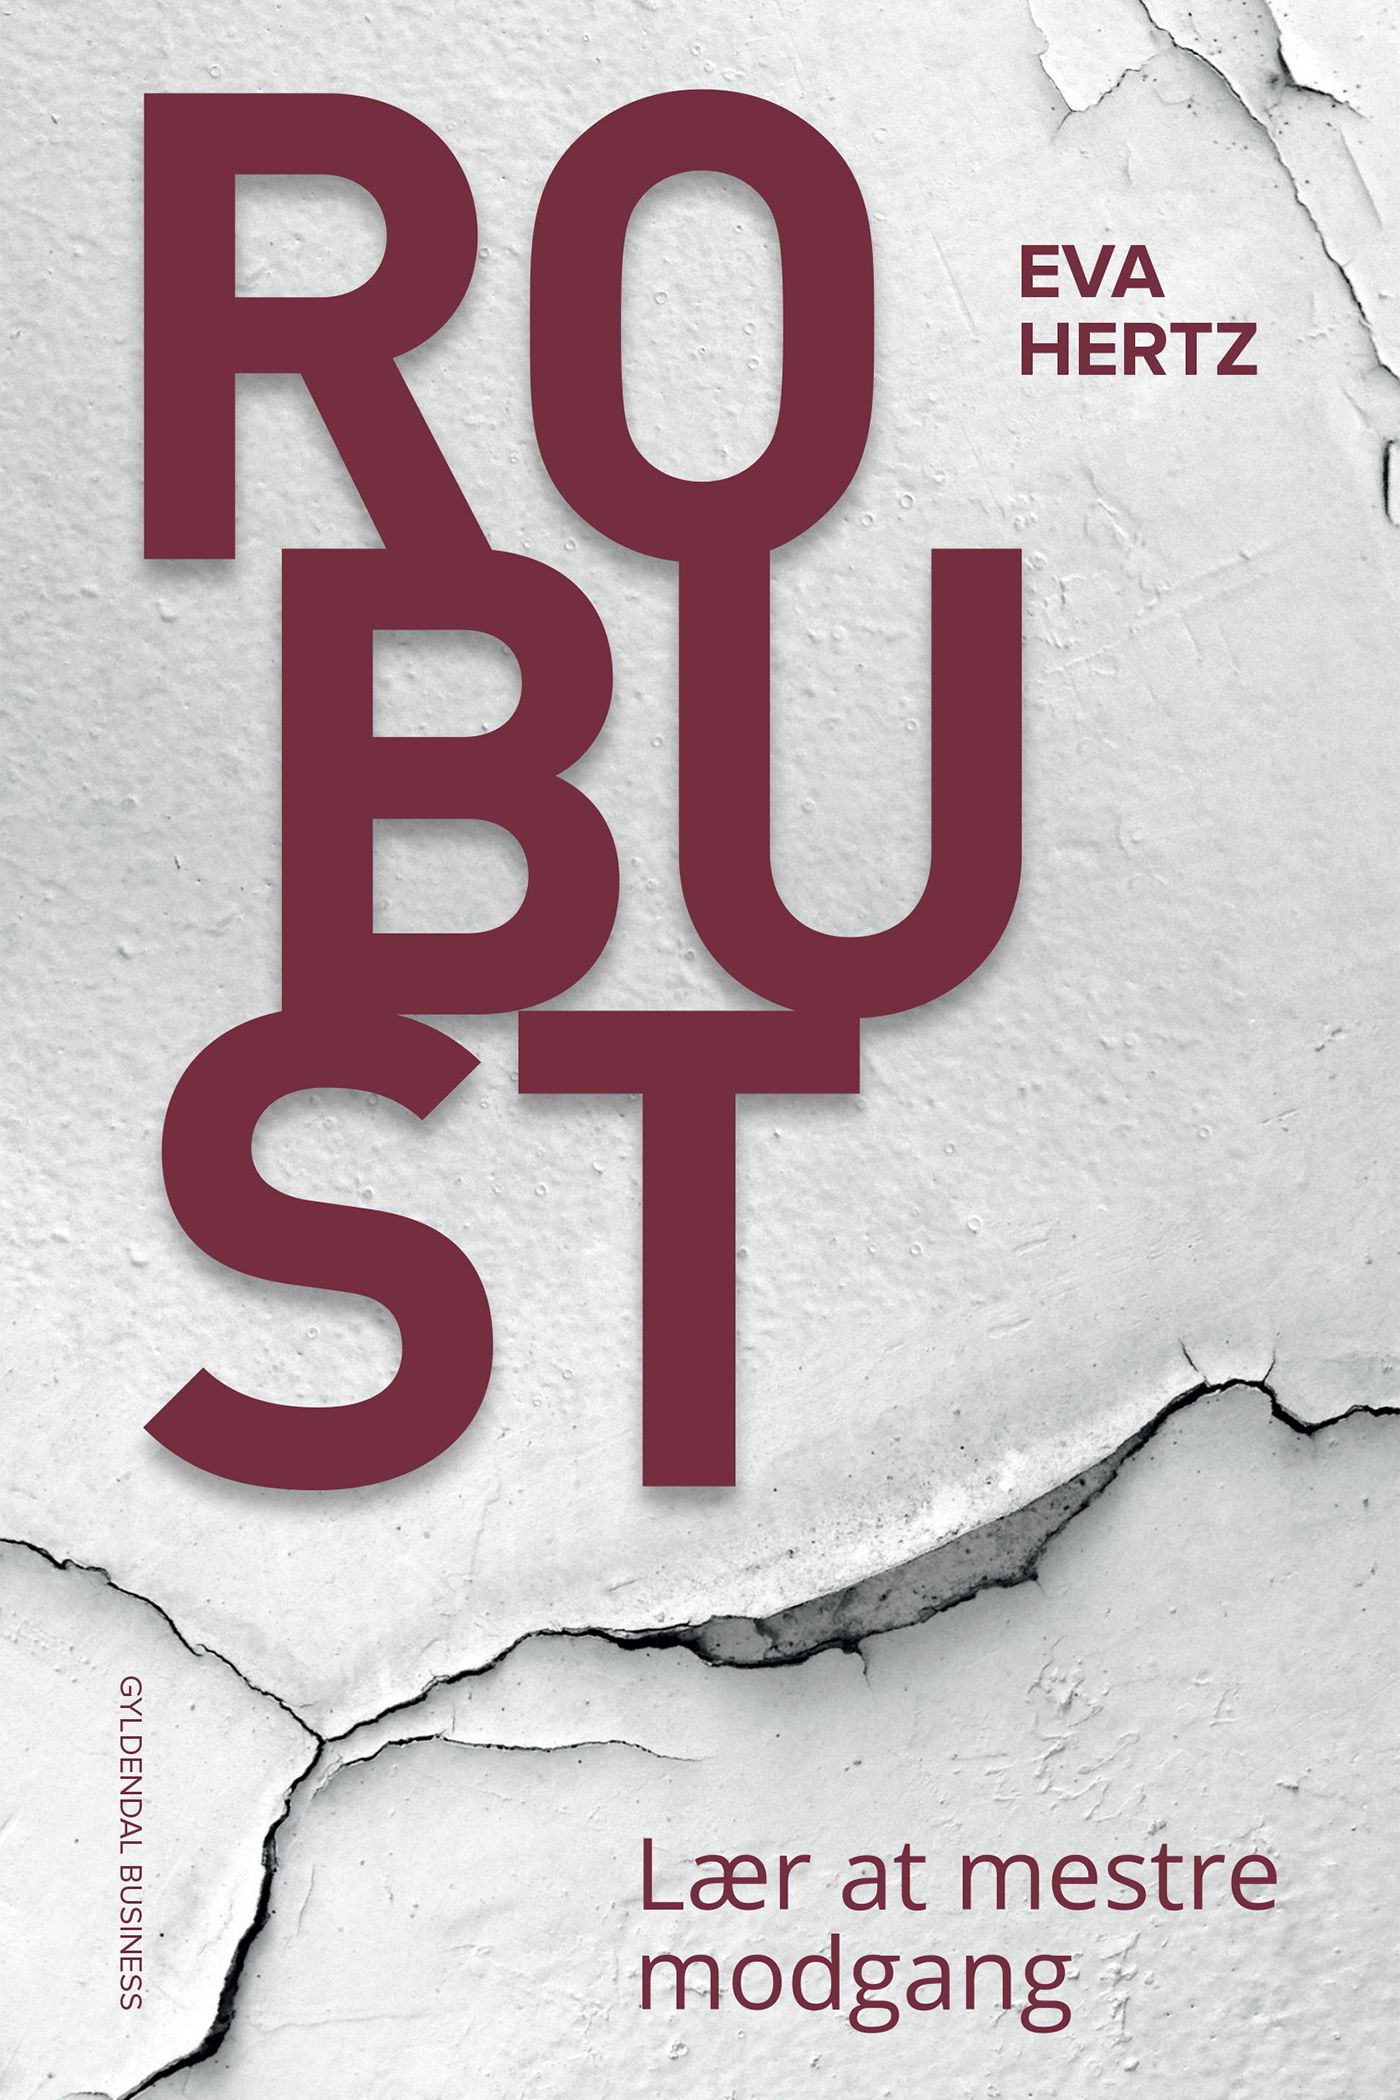 Robust, eBook by Eva Hertz